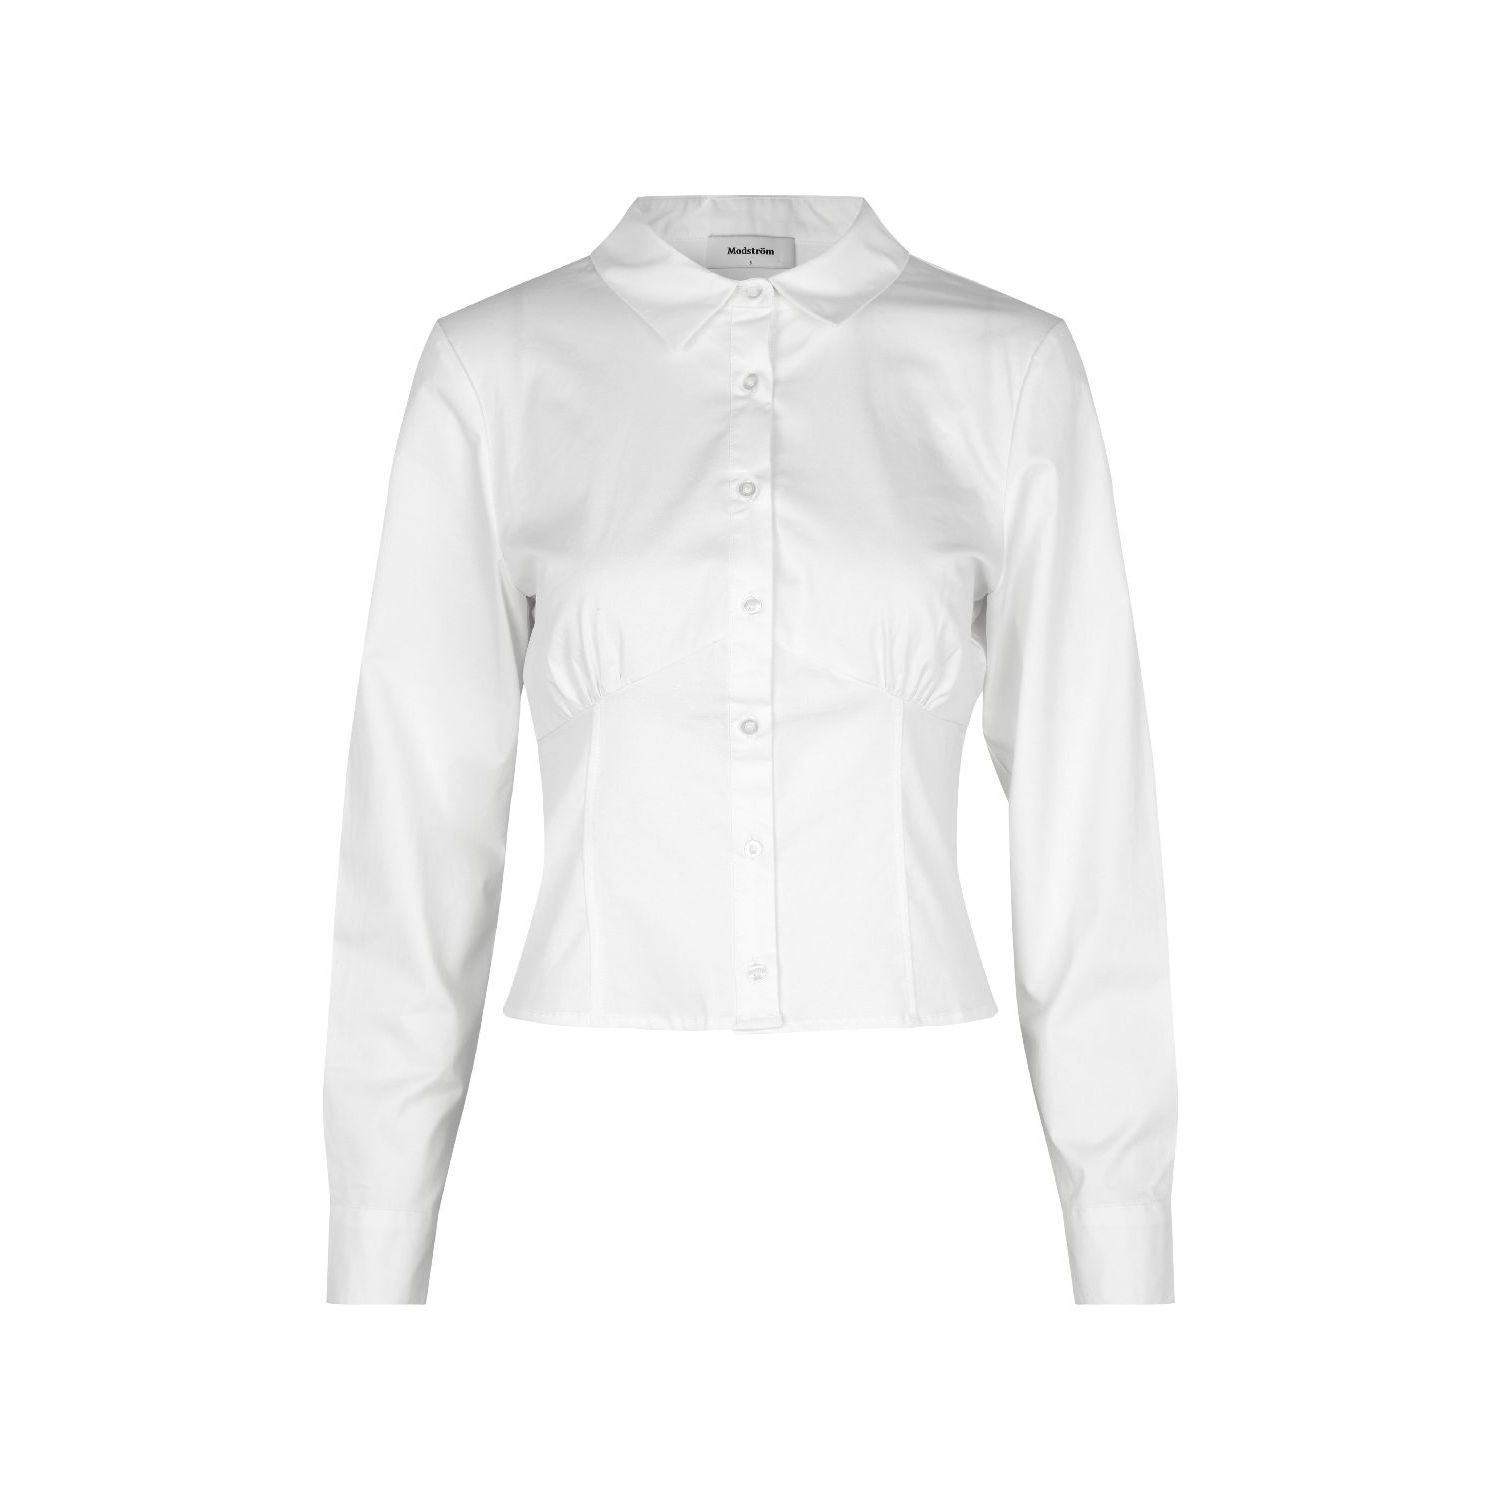 Modström harrison shirt soft white